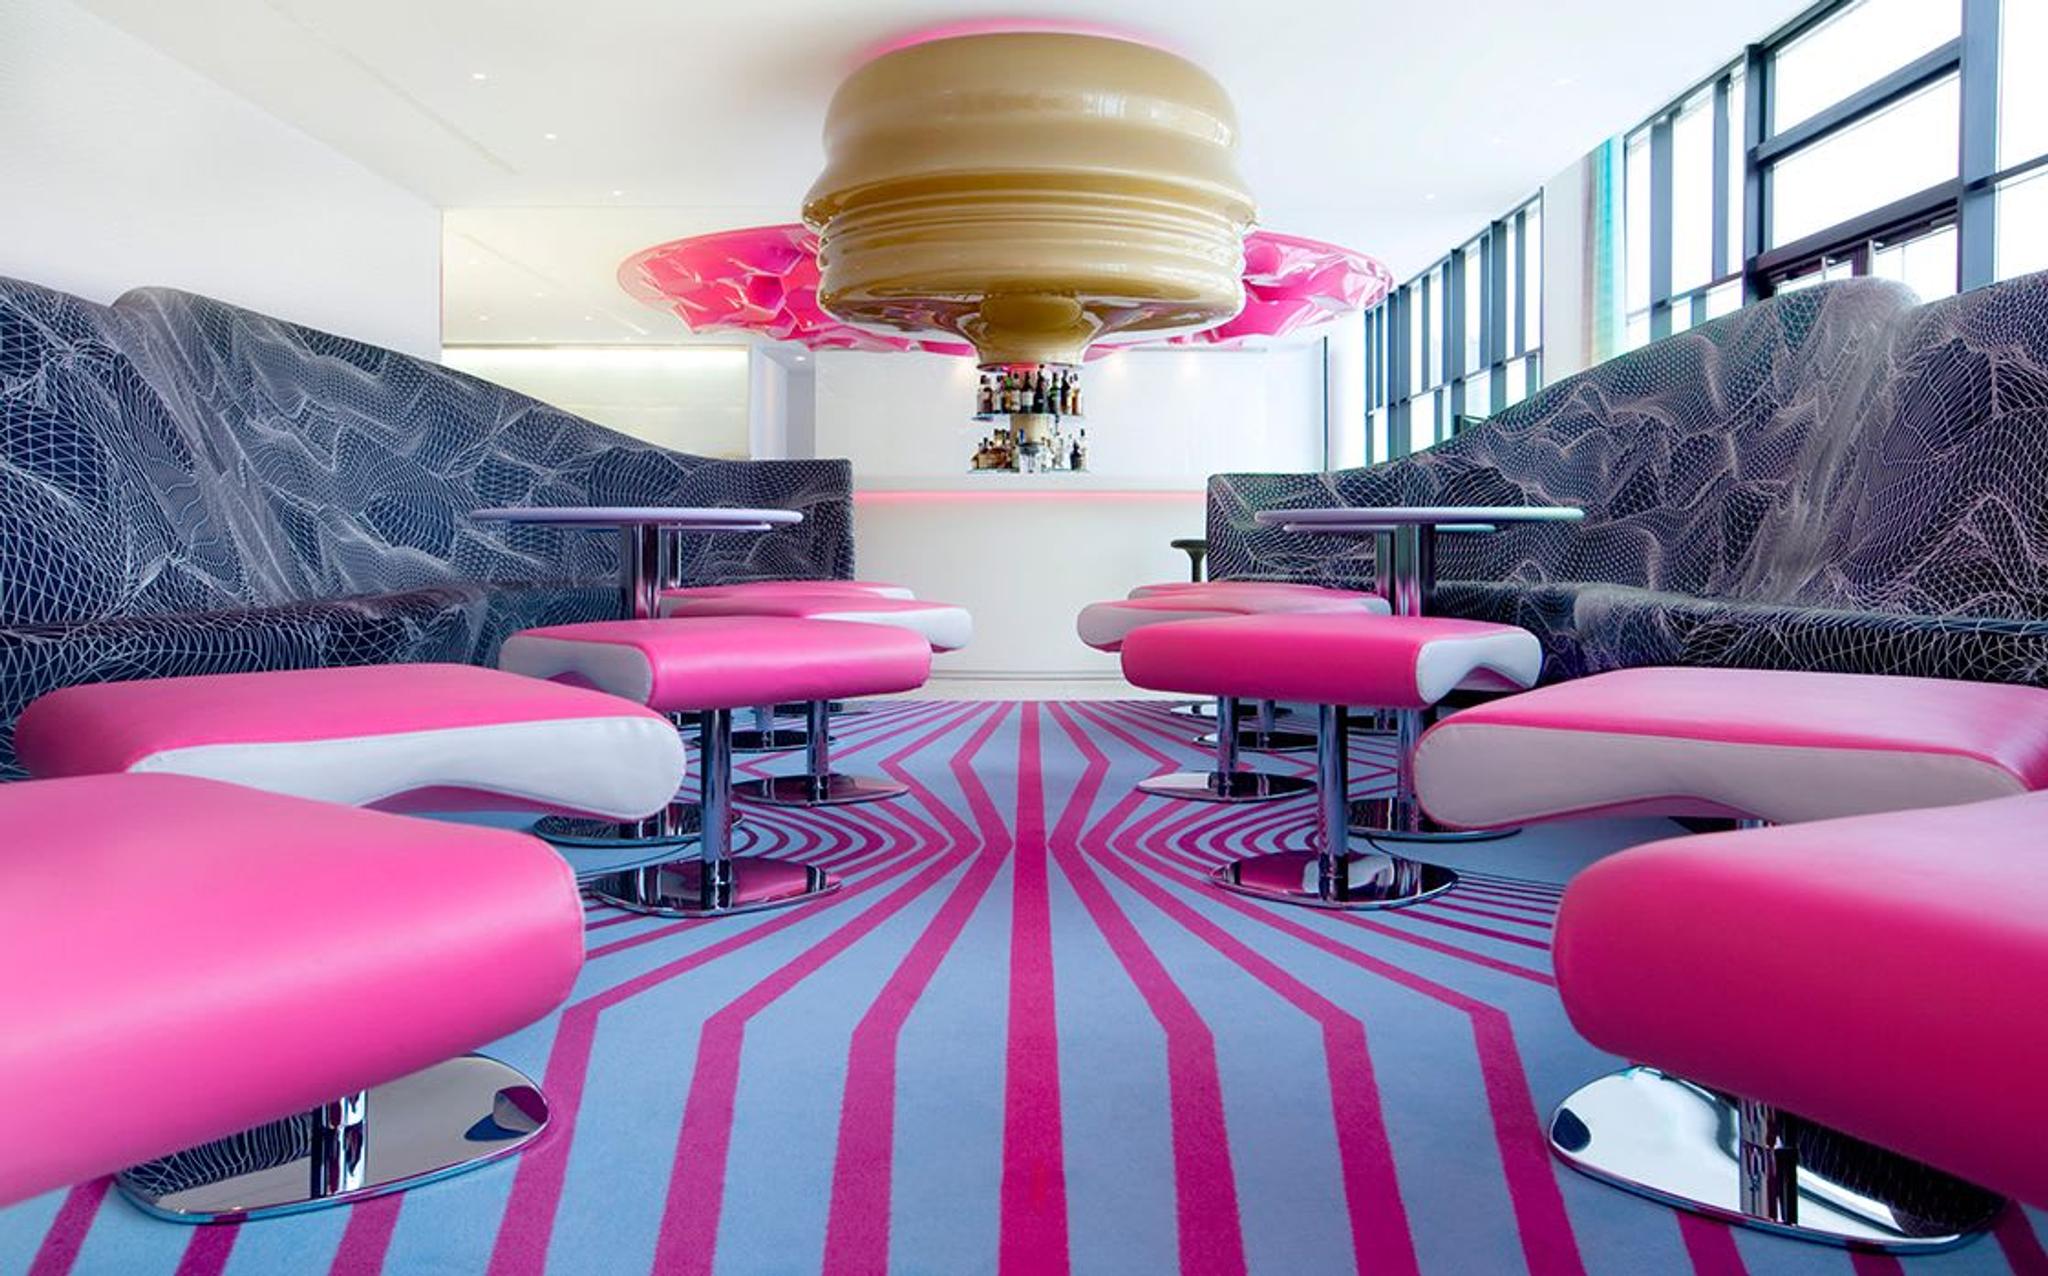 Nhow Berlin Hotel interiors designed by Karim Rashid and Sergei Tchoban